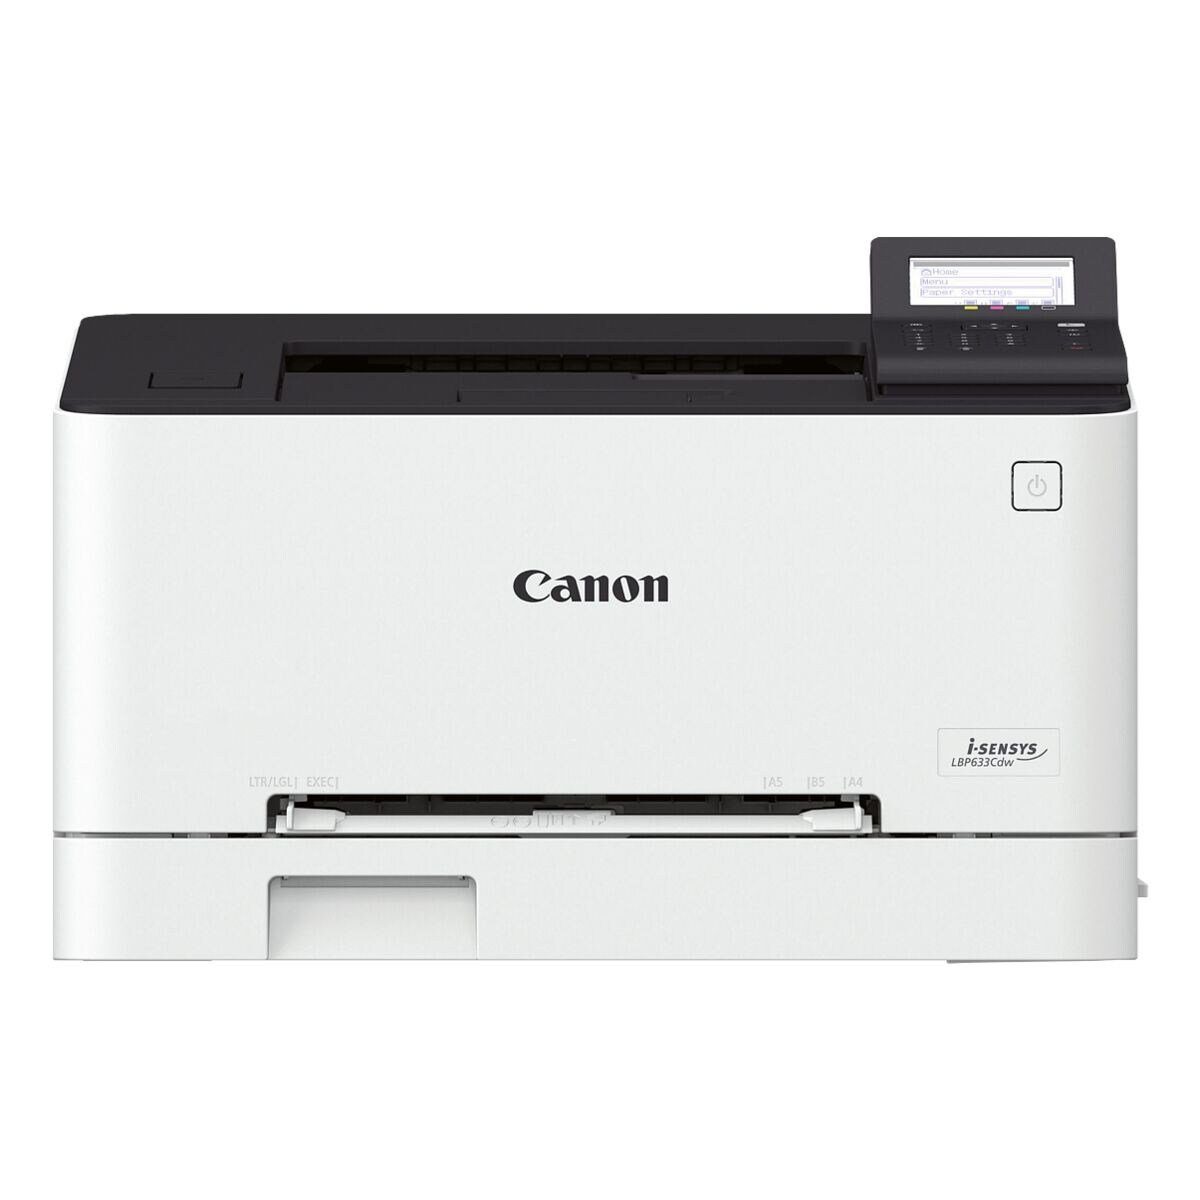 WLAN, (LAN, i-SENSYS 1200 dpi, LBP633Cdw Farblaserdrucker, A4) Canon x 1200